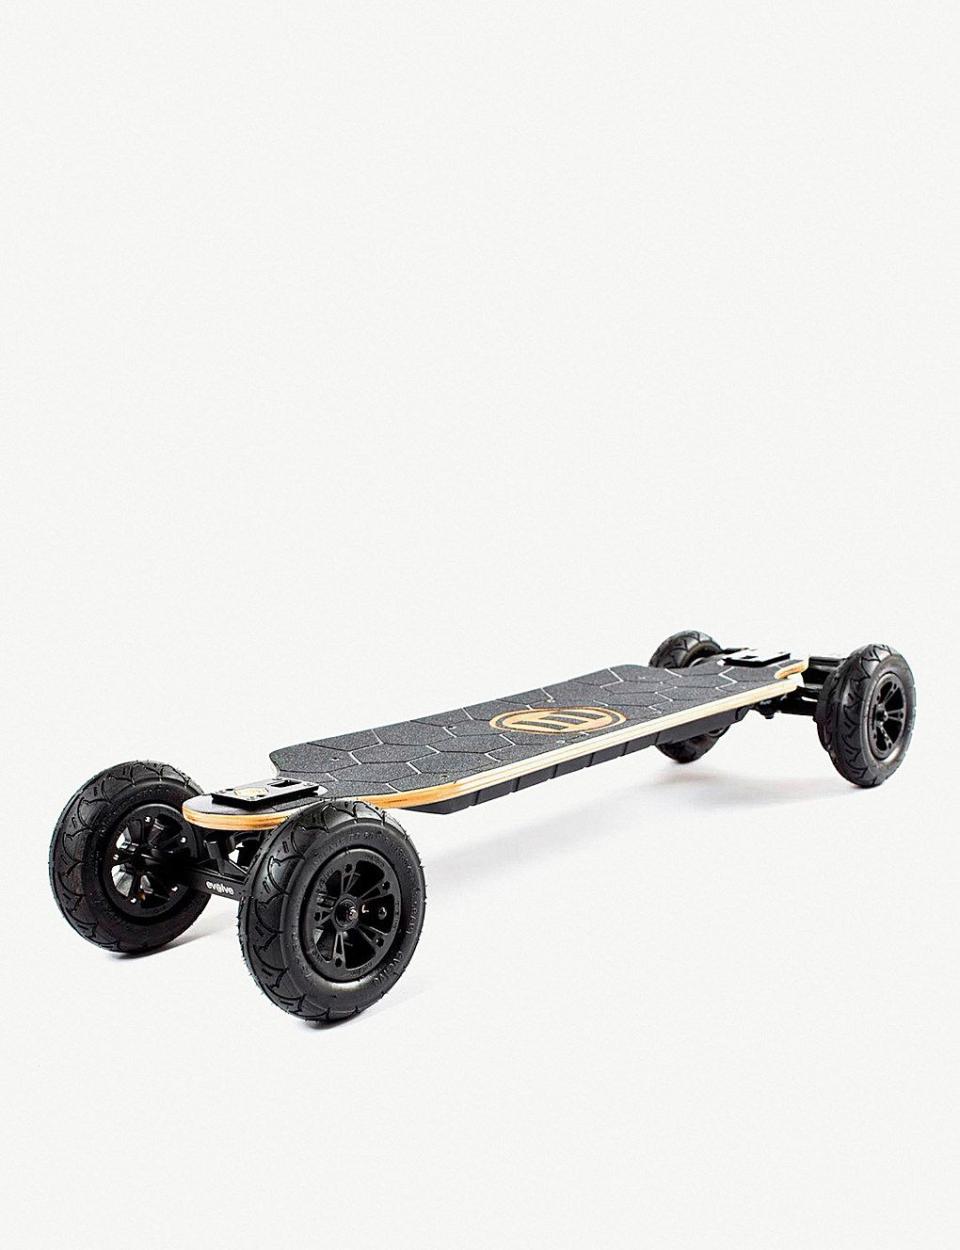 76) Evolve Bamboo GTX electric skateboard